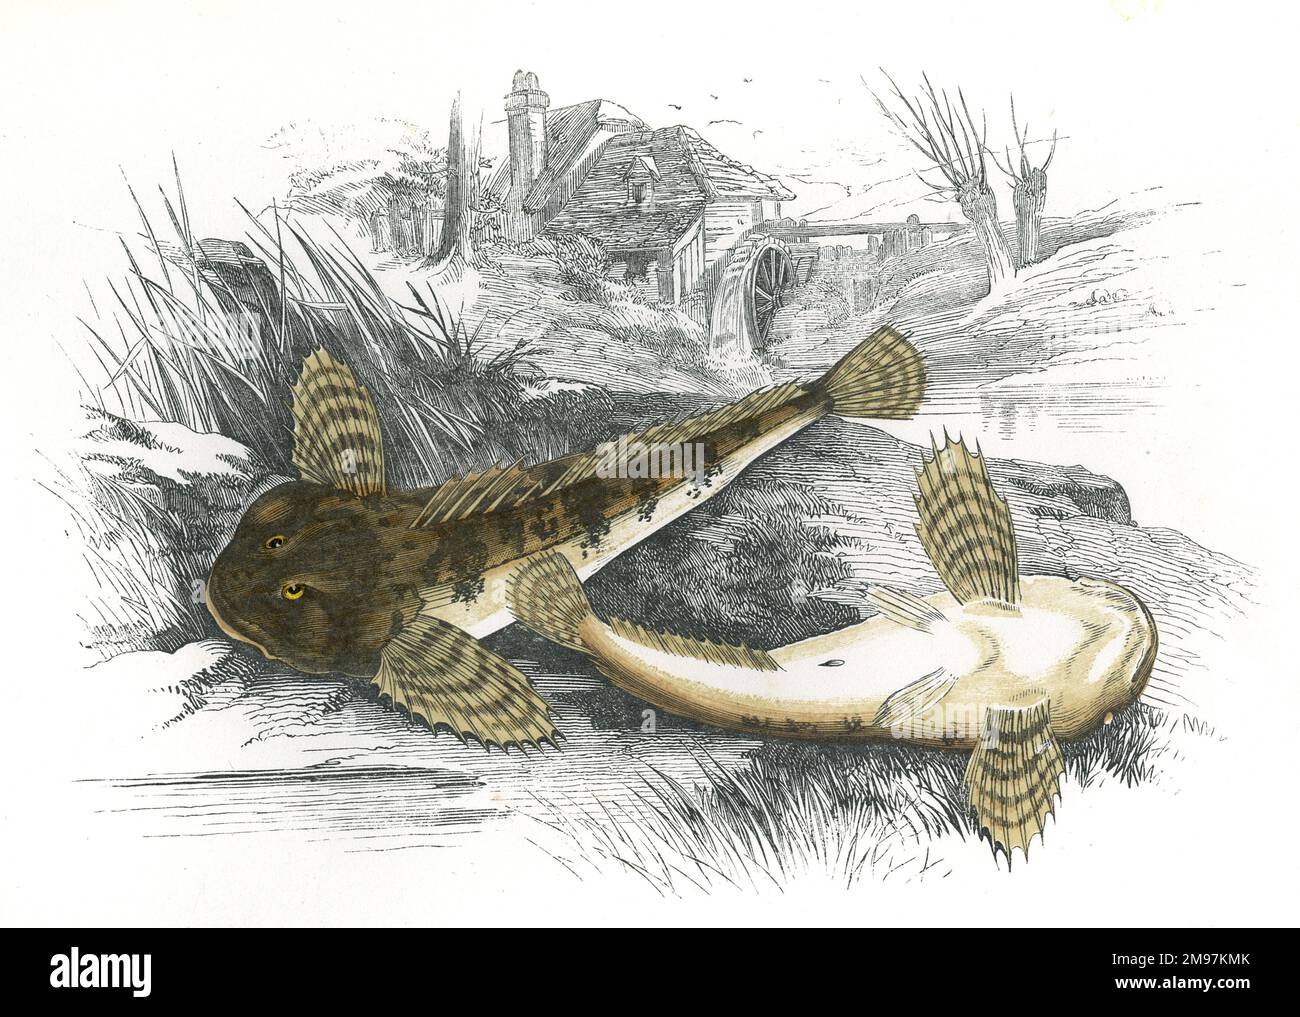 Cottus gobio, or European Bullhead, a freshwater fish also known as Miller's Thumb, Freshwater Sculpin, River Bullhead and Common Bullhead. Stock Photo